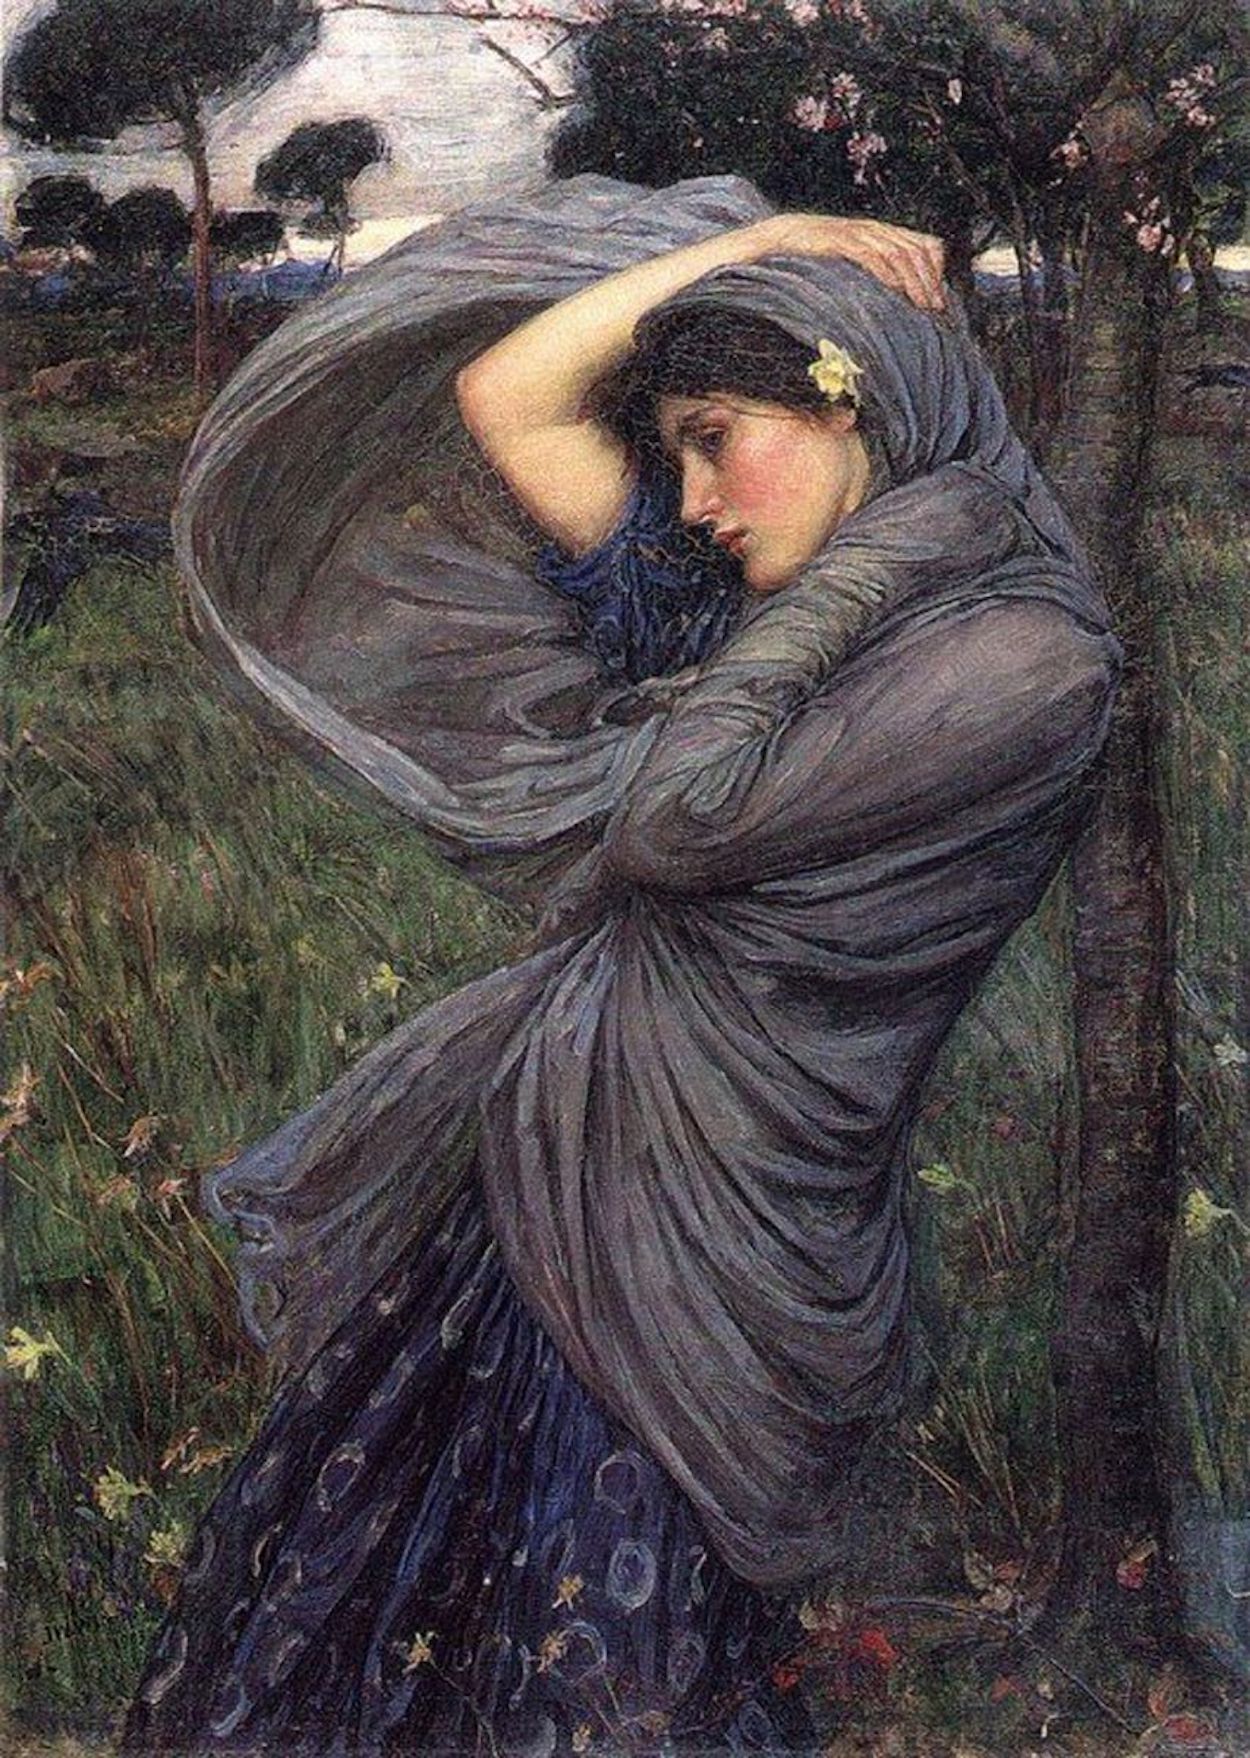 Boreasz by John William Waterhouse - 1903 - 68.8 x 94 cm 